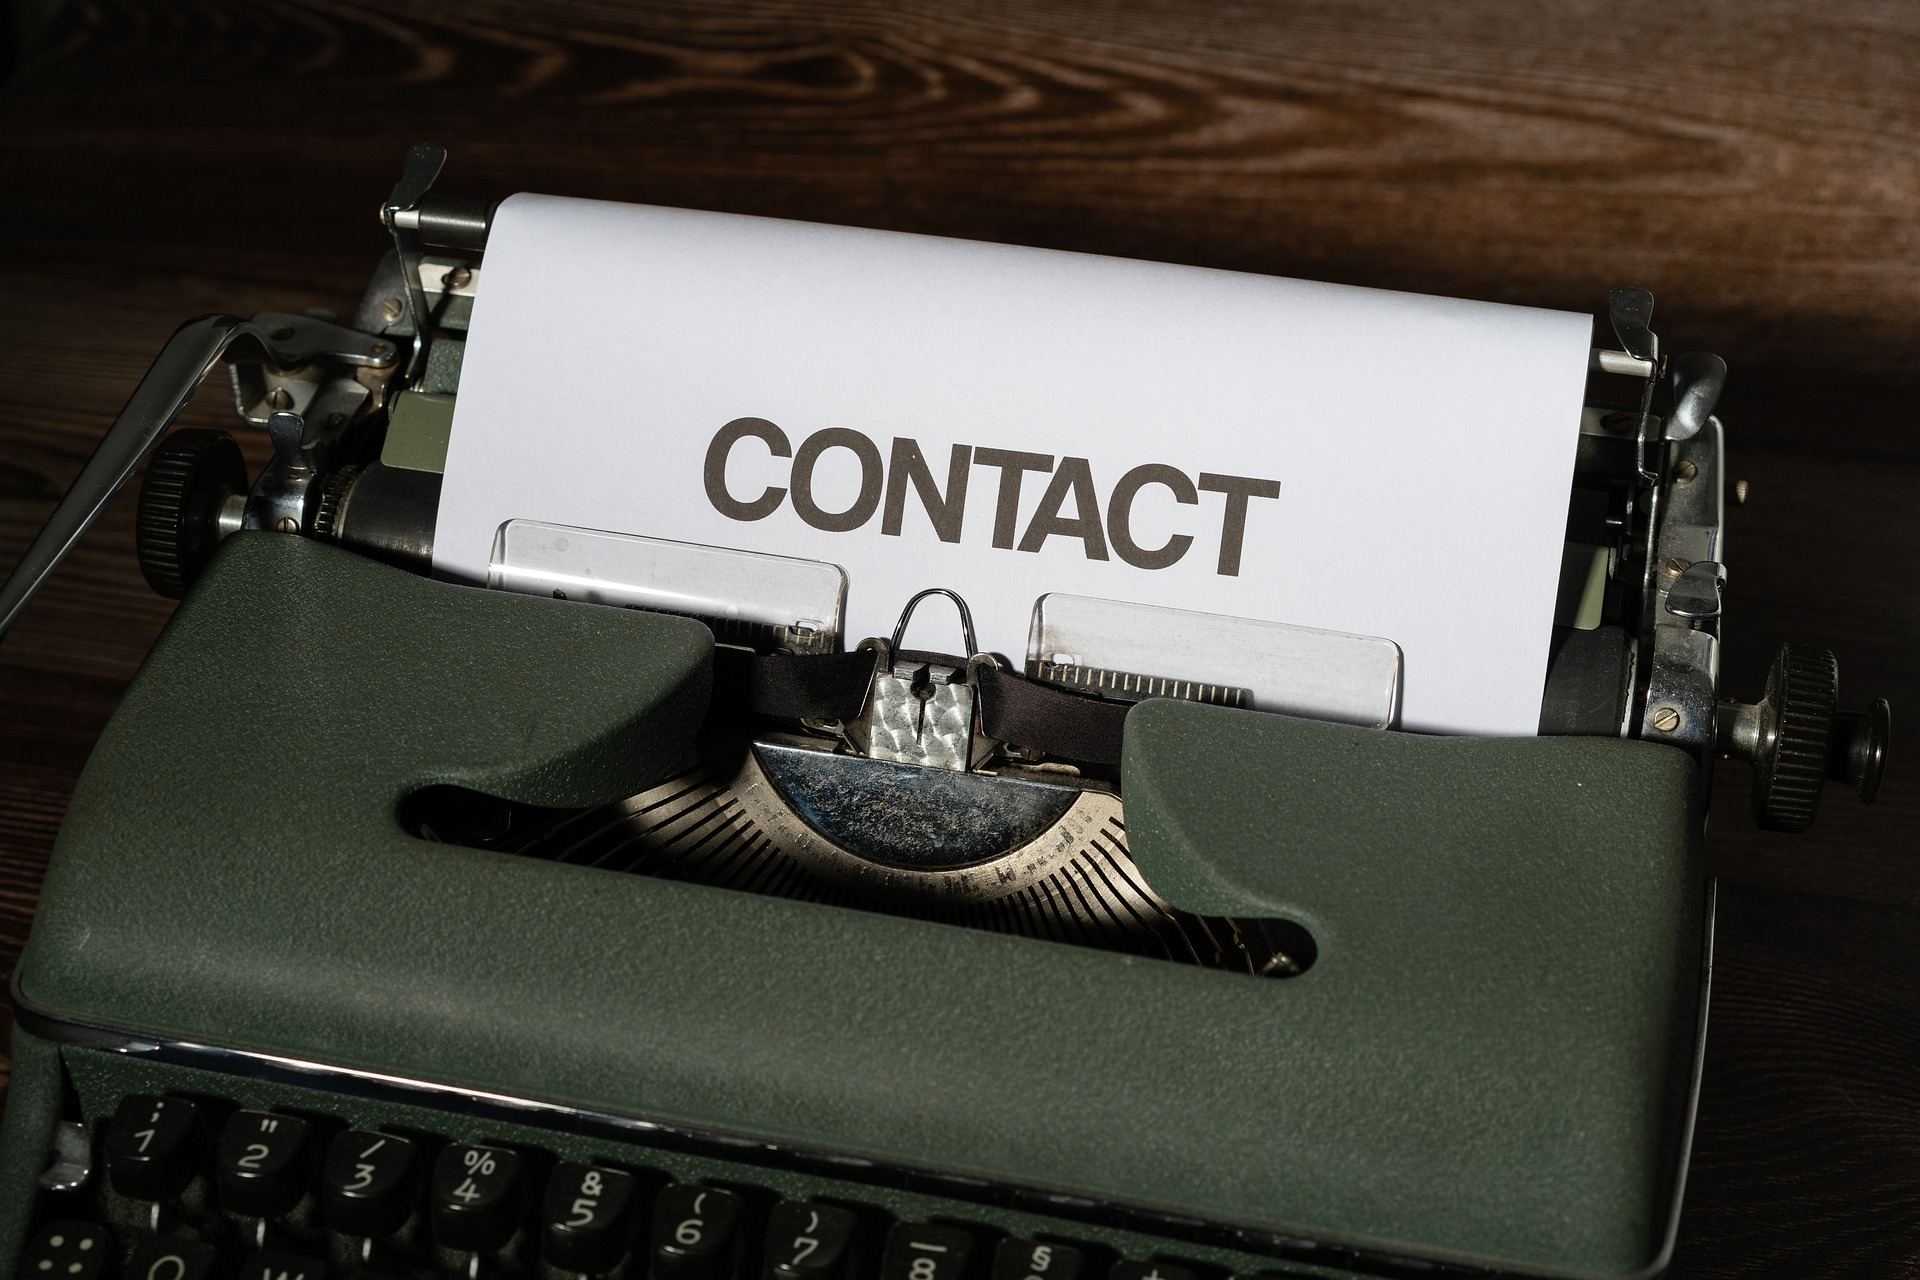 Contact Form 7で送信完了画面へのリダイレクト時に送信内容を取得する方法